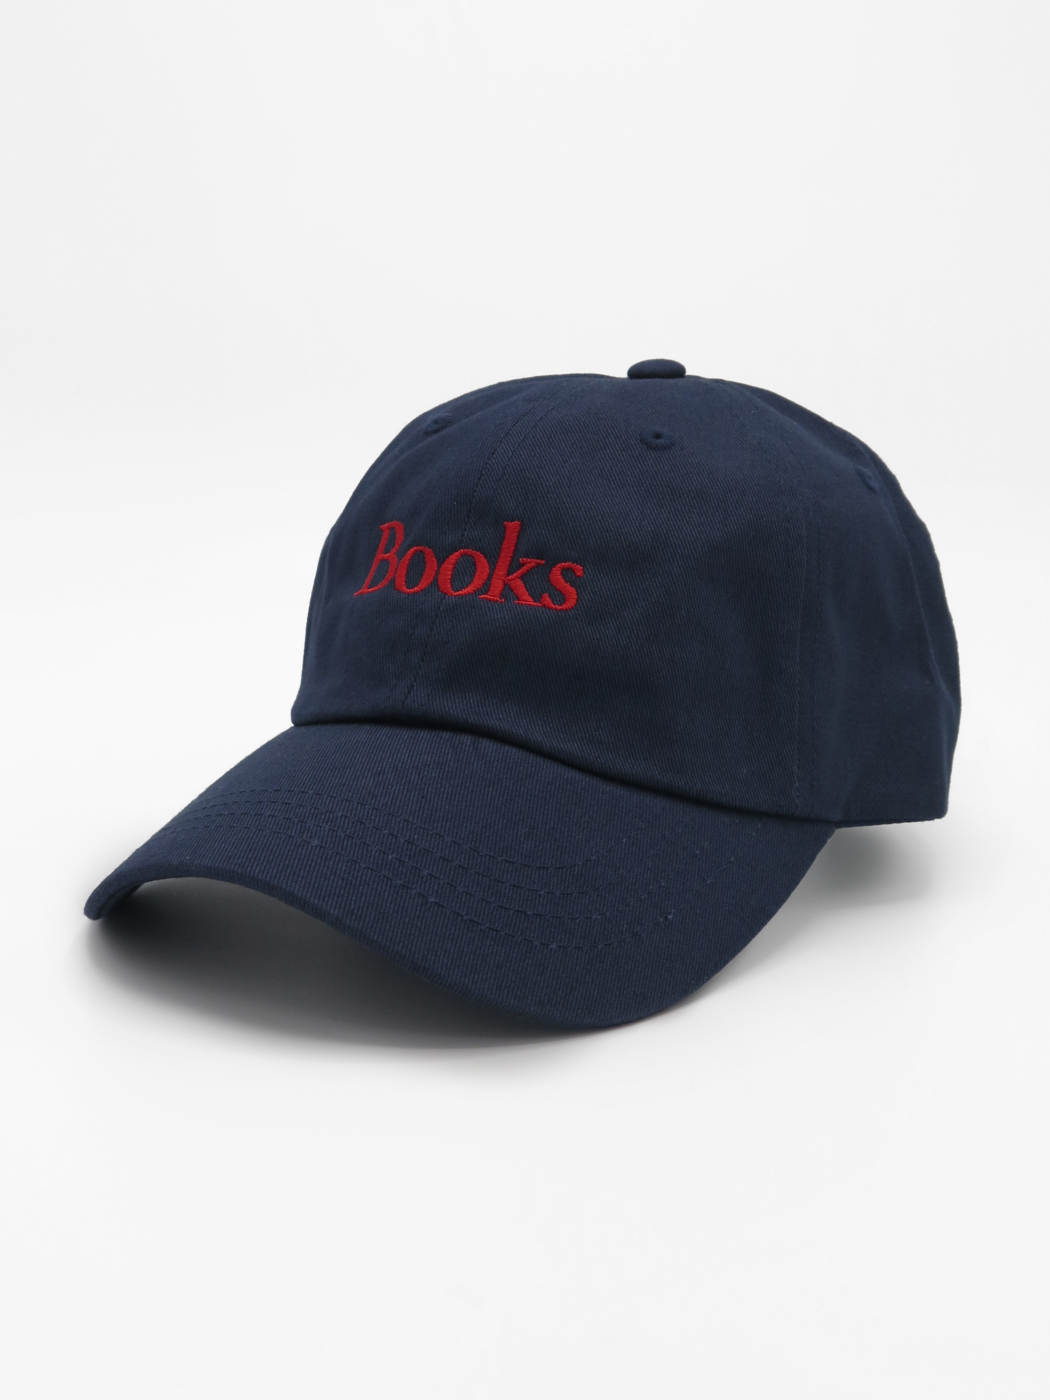 Books baseball cap, Navy Blue